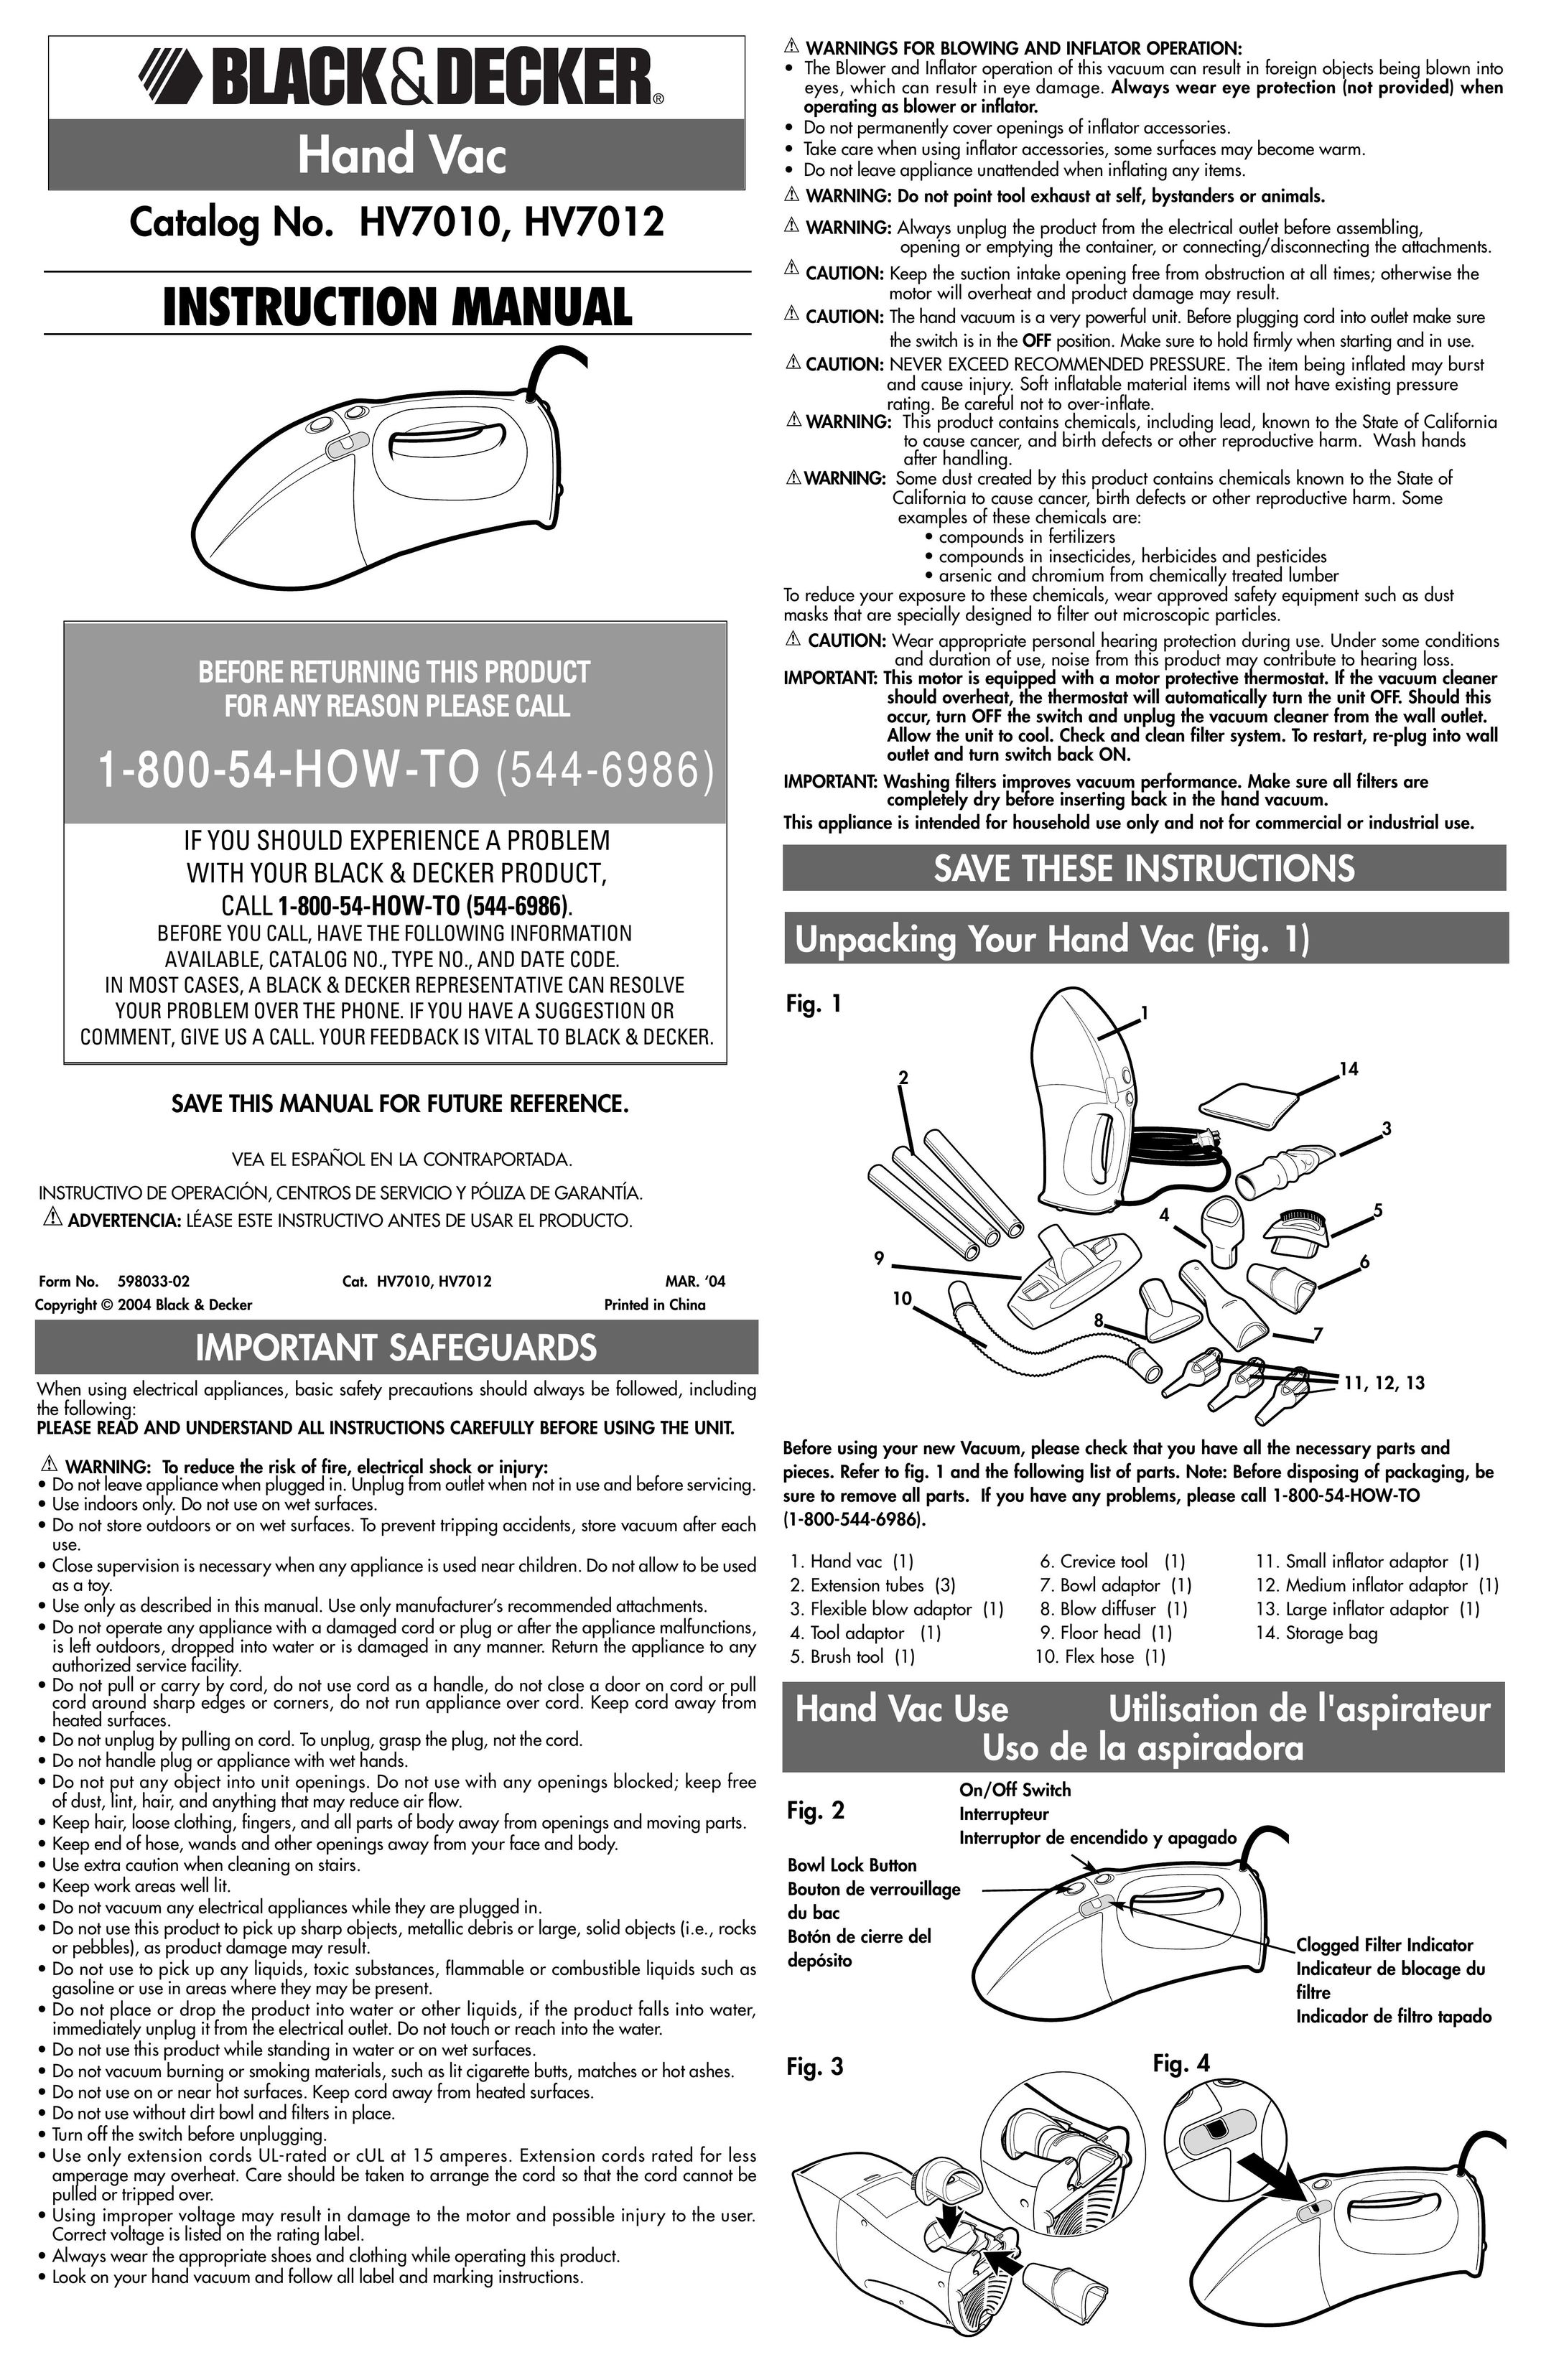 Black & Decker 598033-02 Vacuum Cleaner User Manual